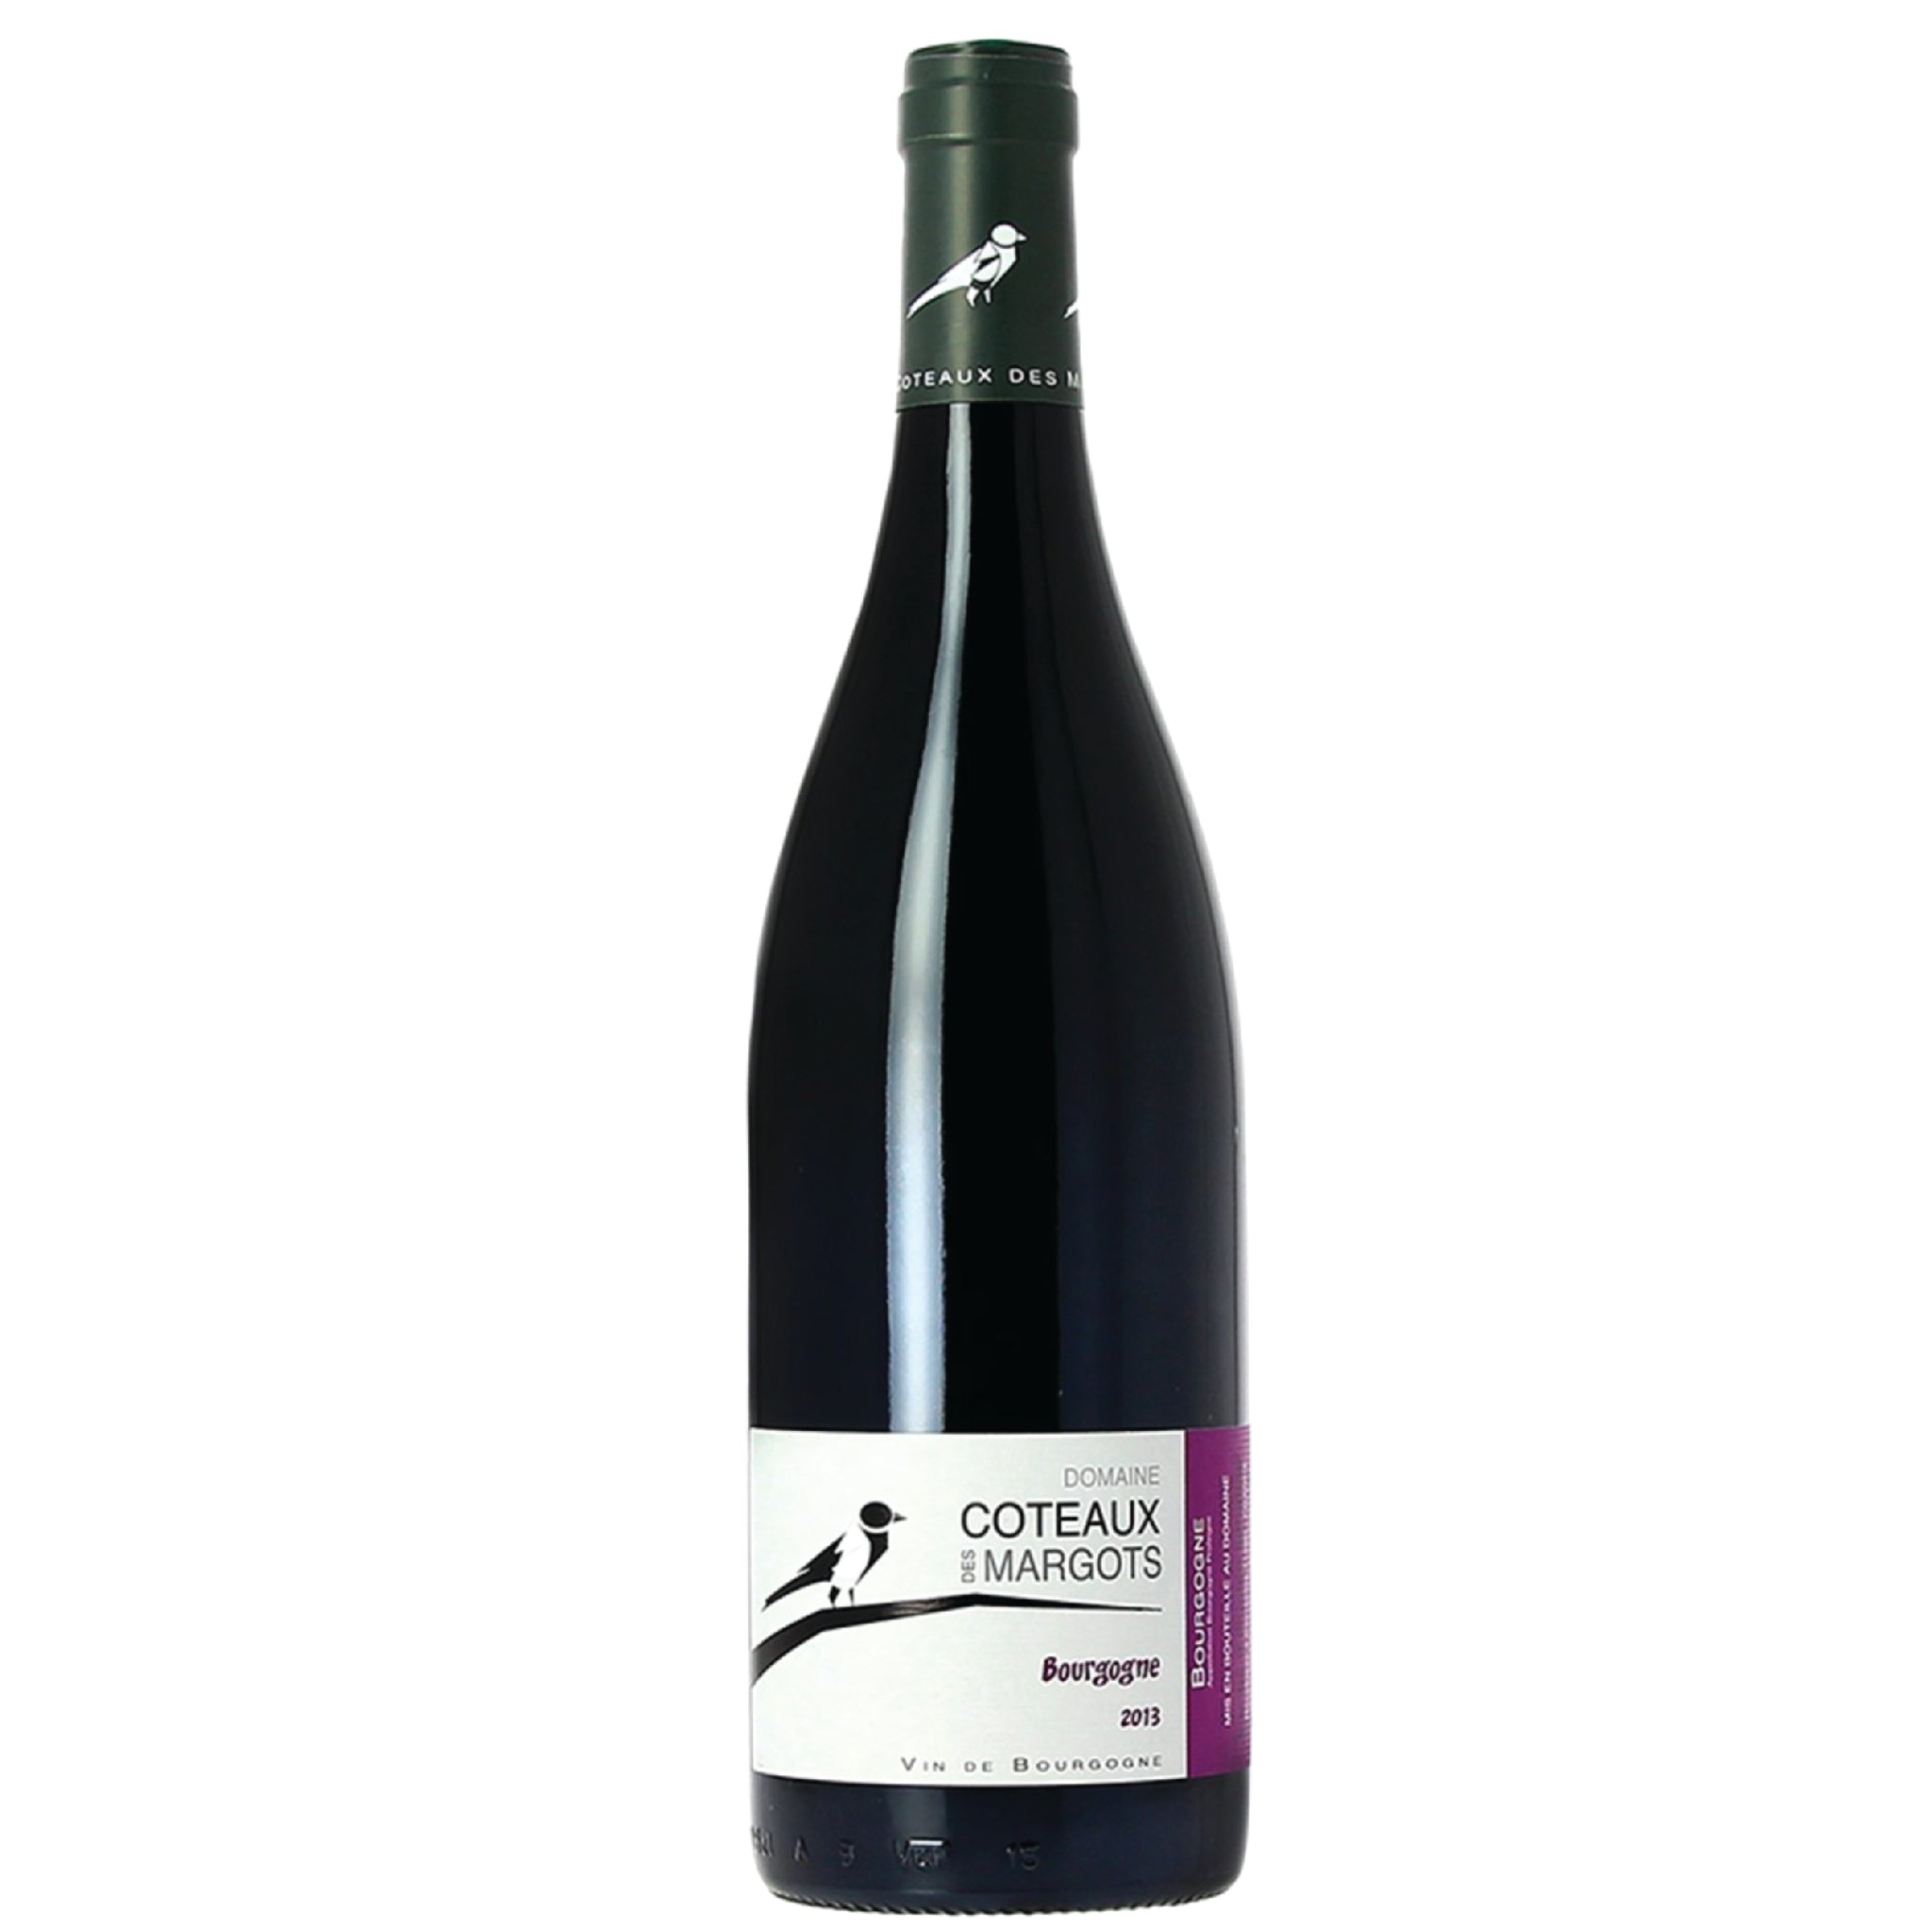 Bourgogne Pinot Noir – Pierreclos Imports